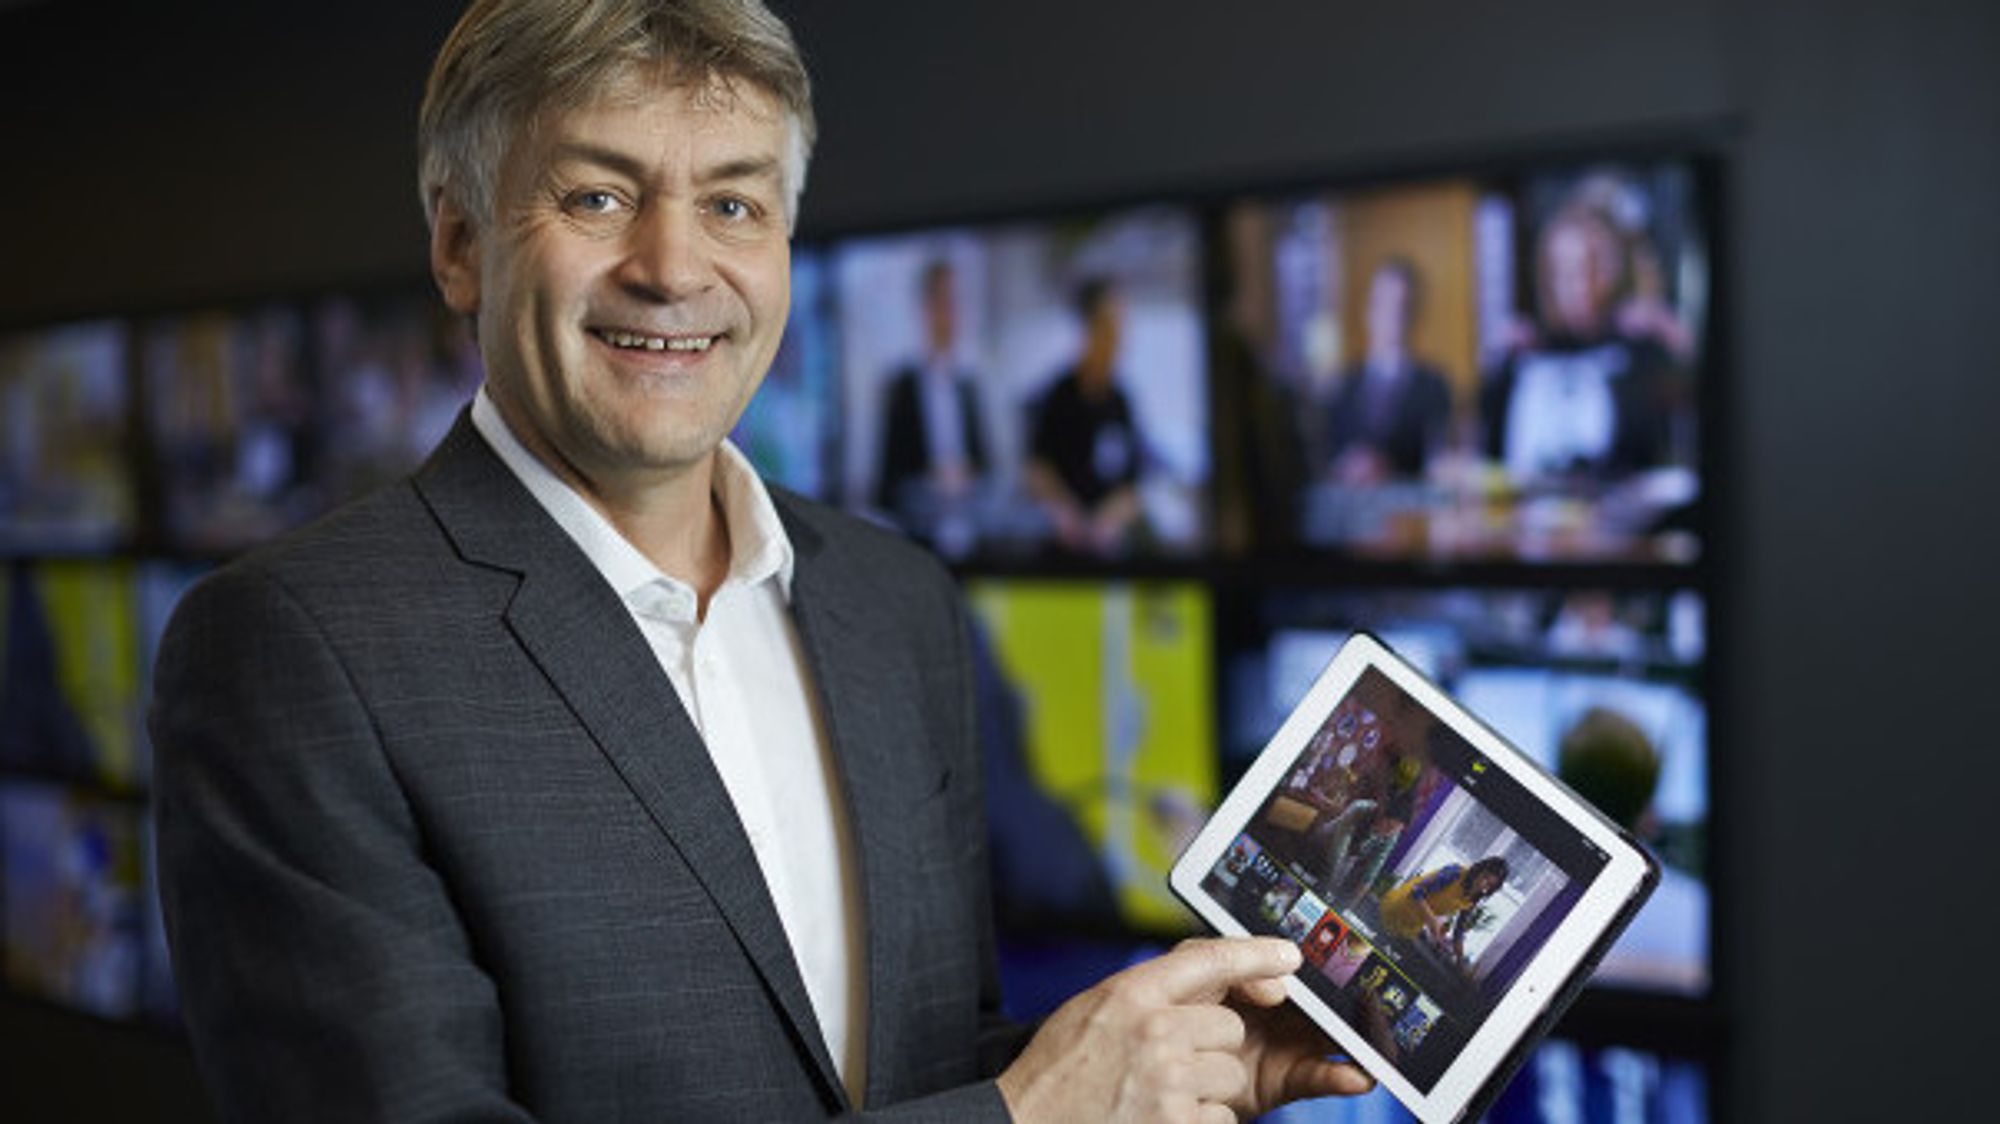 TDC Get-sjef i Norge, Gunnar Evensen, er endelig klar med mobiltjenester for det norske markedet. Kunder som kjøper bredbånd, TV og mobil får doblet mobildatapakken.